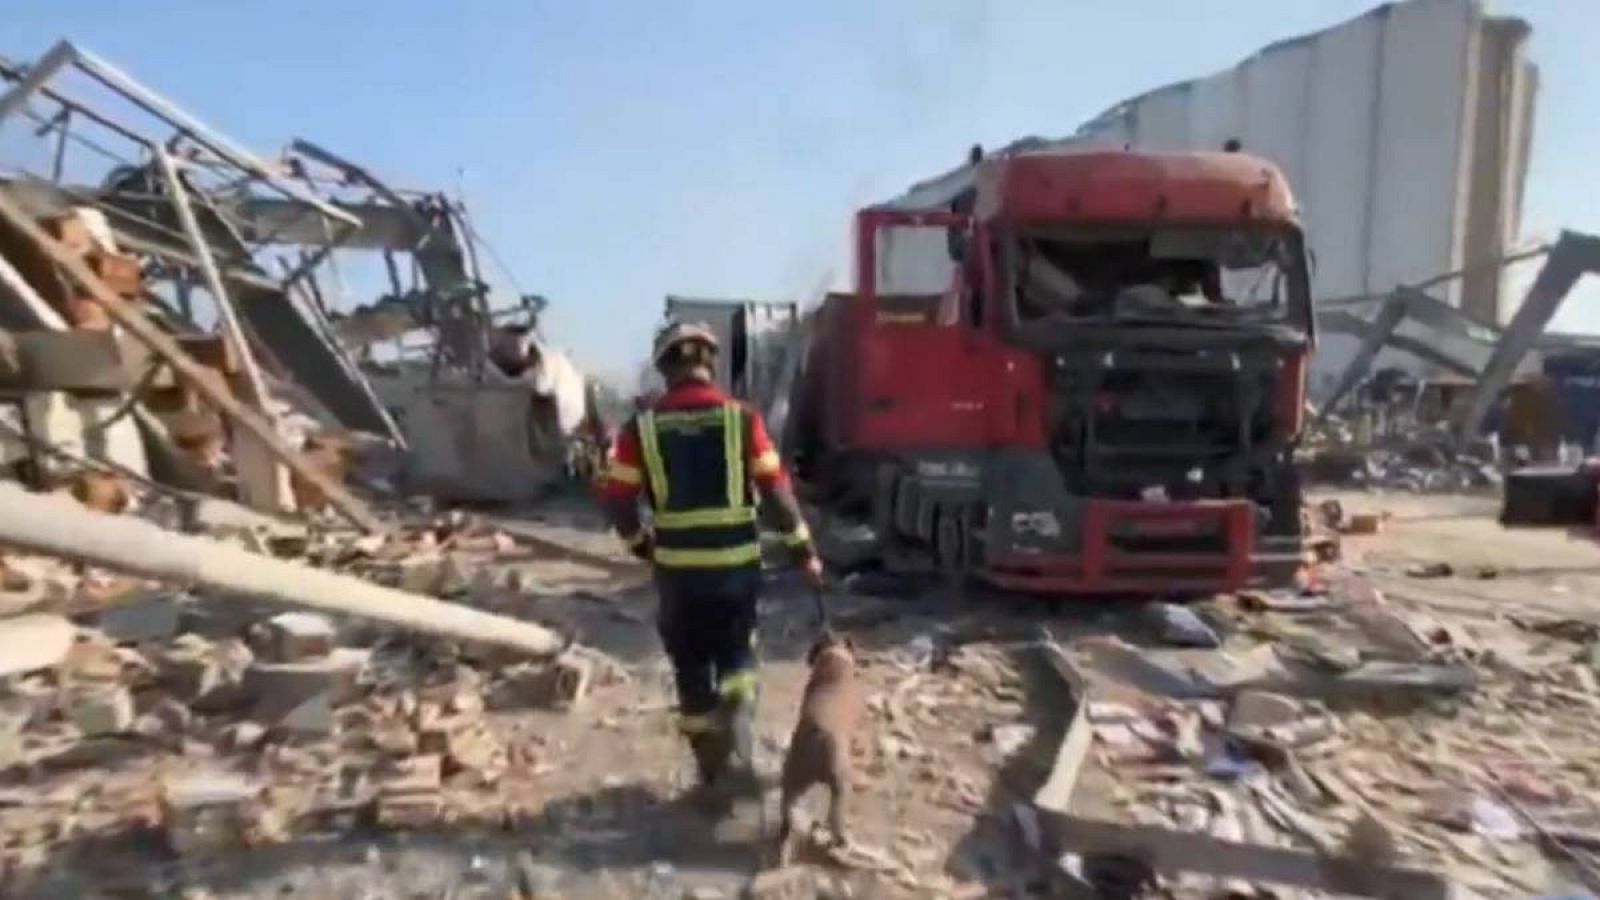 Beoirut | Un equipo de bomberos españoles viaja a Beirut para buscar supervivientes